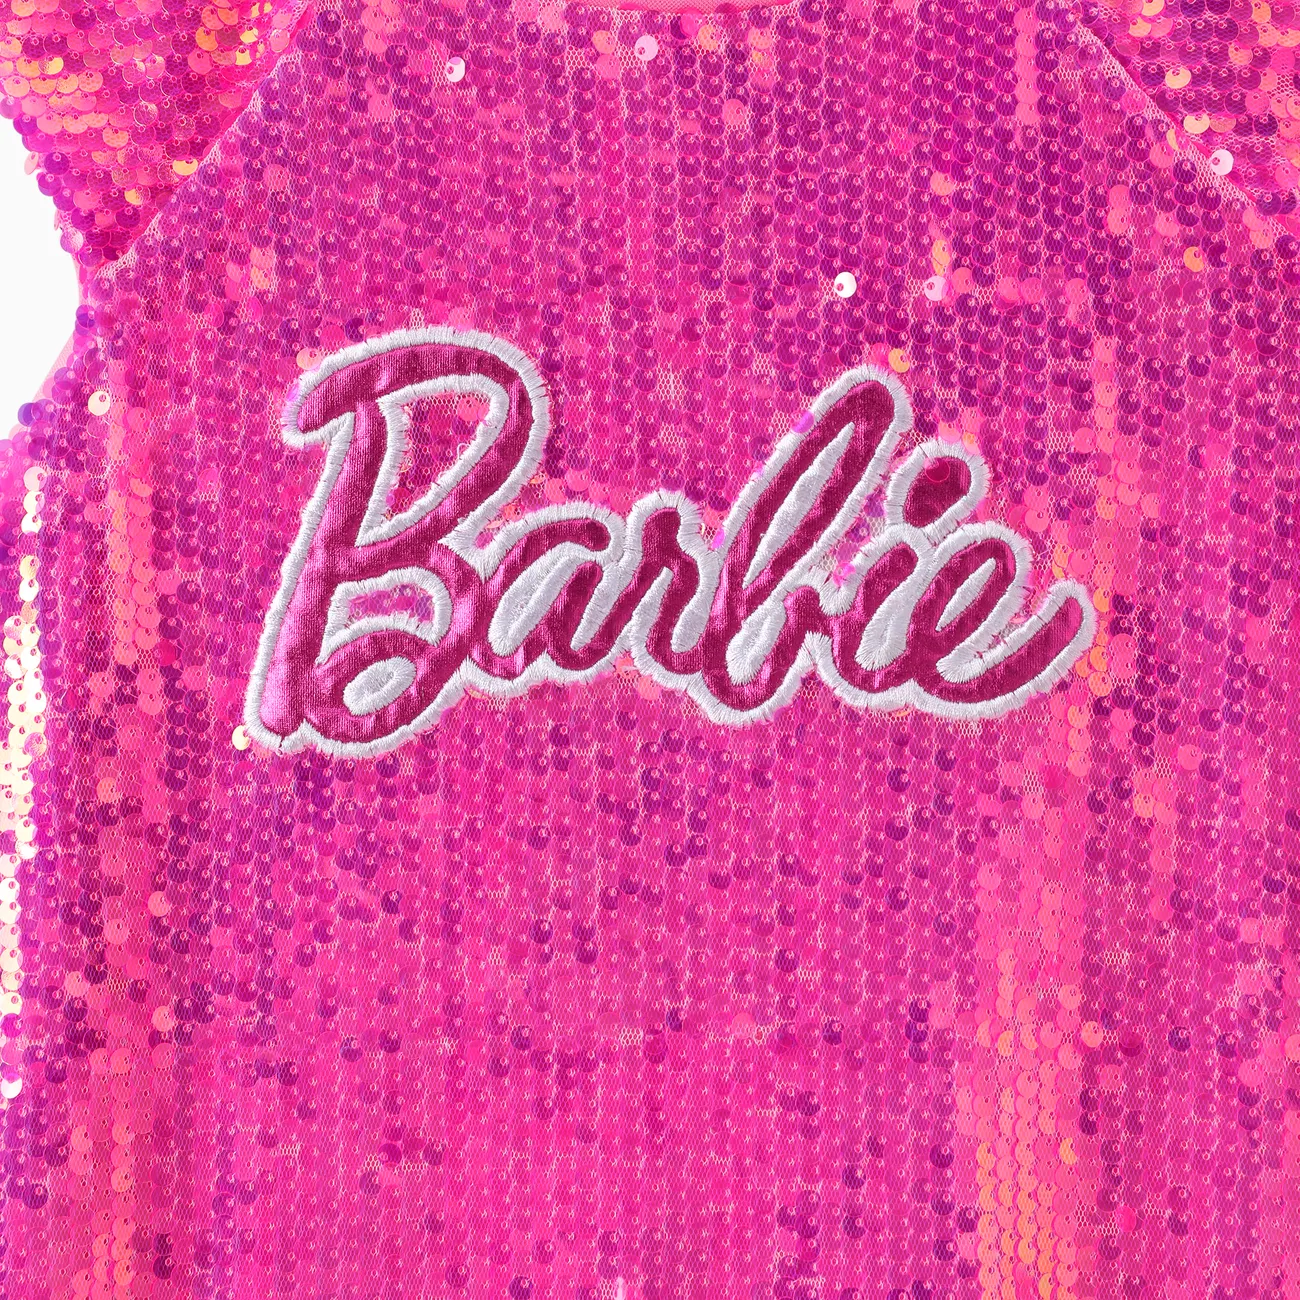 Barbie IP Menina Mangas franzidas Bonito Vestidos Roseo big image 1